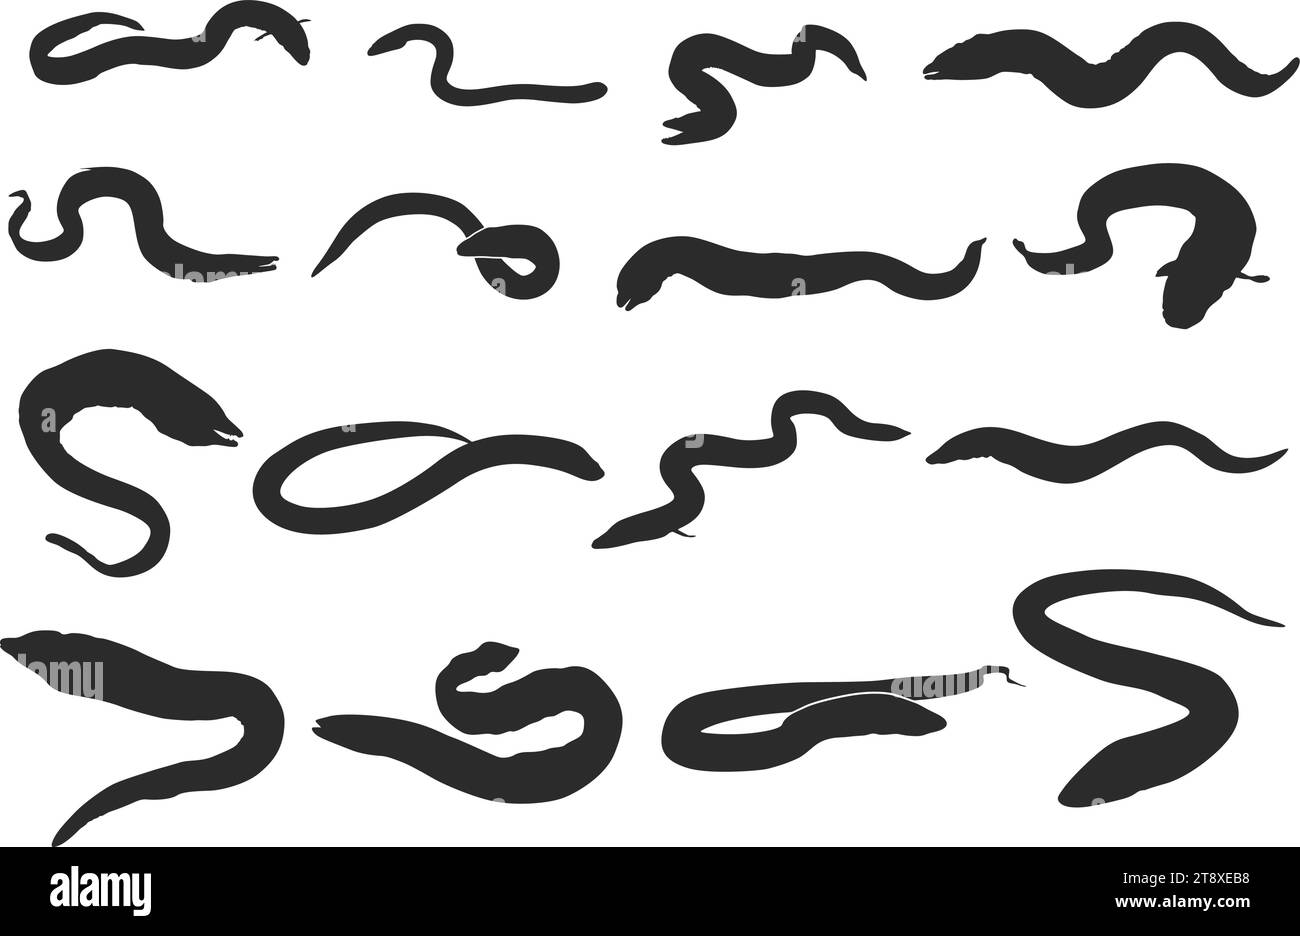 Eel fish silhouette, Moray eel fish silhouette, European eel silhouette, Moray eel fish svg, Eel fish vector Stock Vector